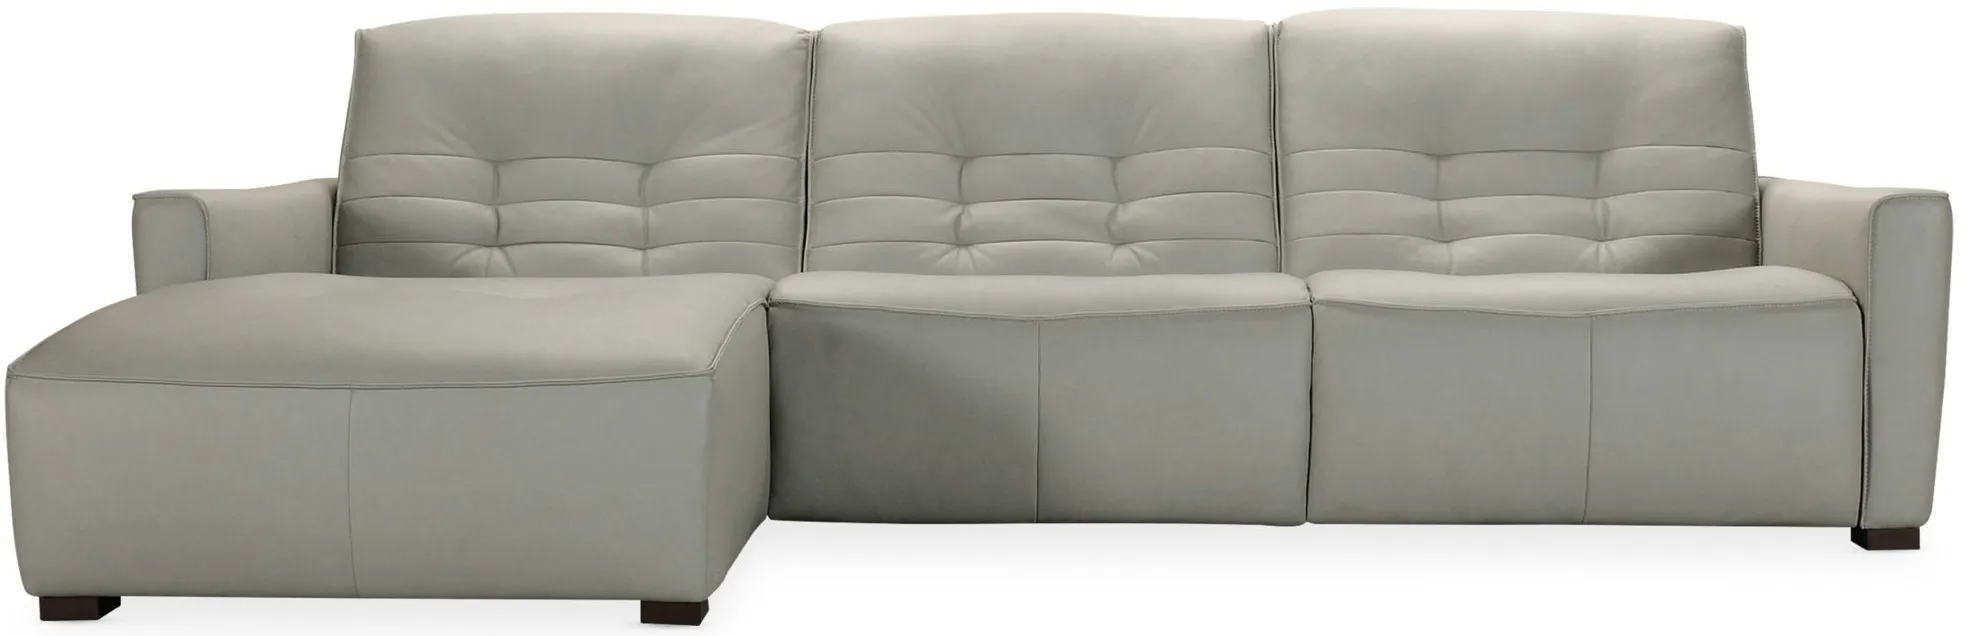 Reaux 3-pc. Power Motion Sofa in Grey by Hooker Furniture